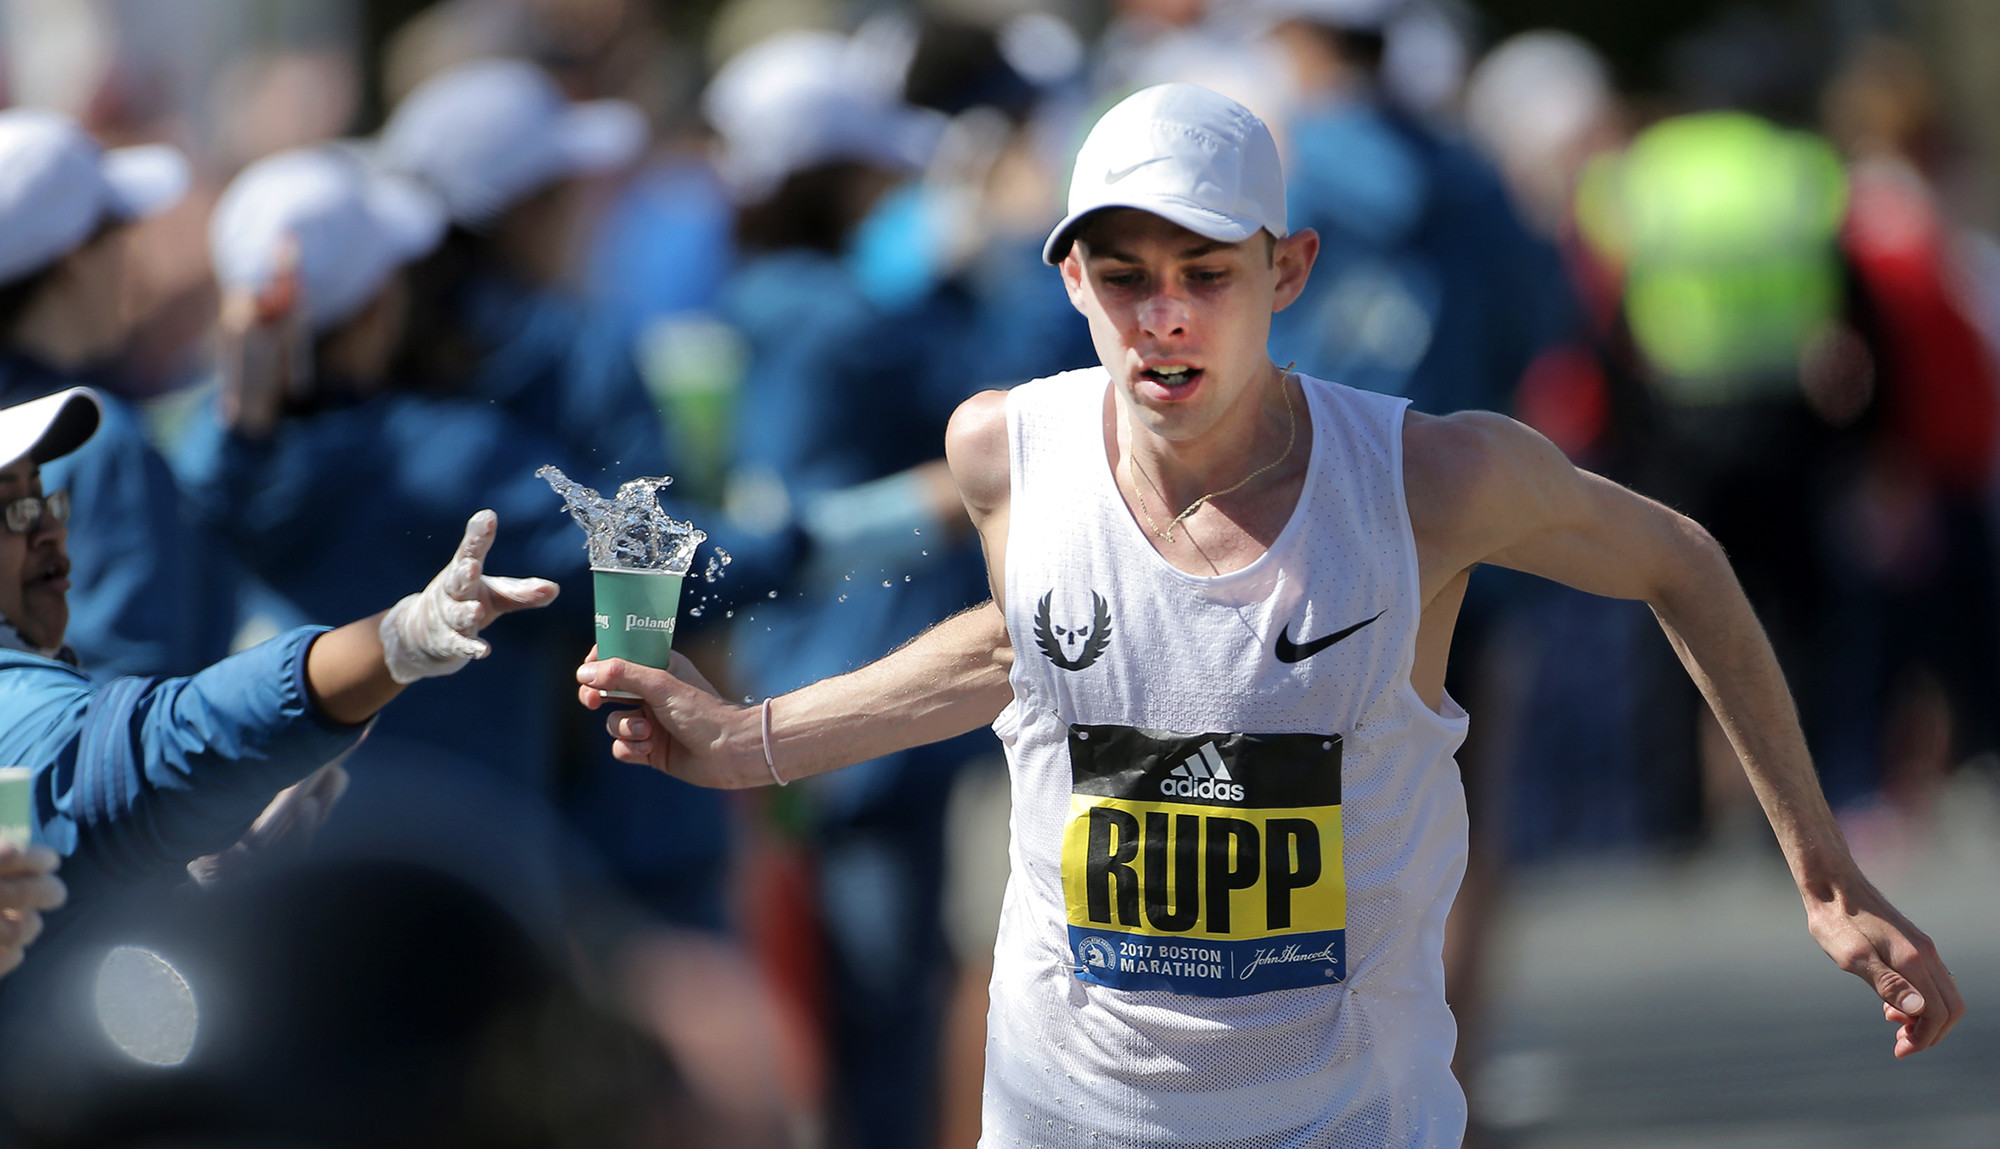 U.S. Menâ€™s Runner of the Year: Galen Rupp